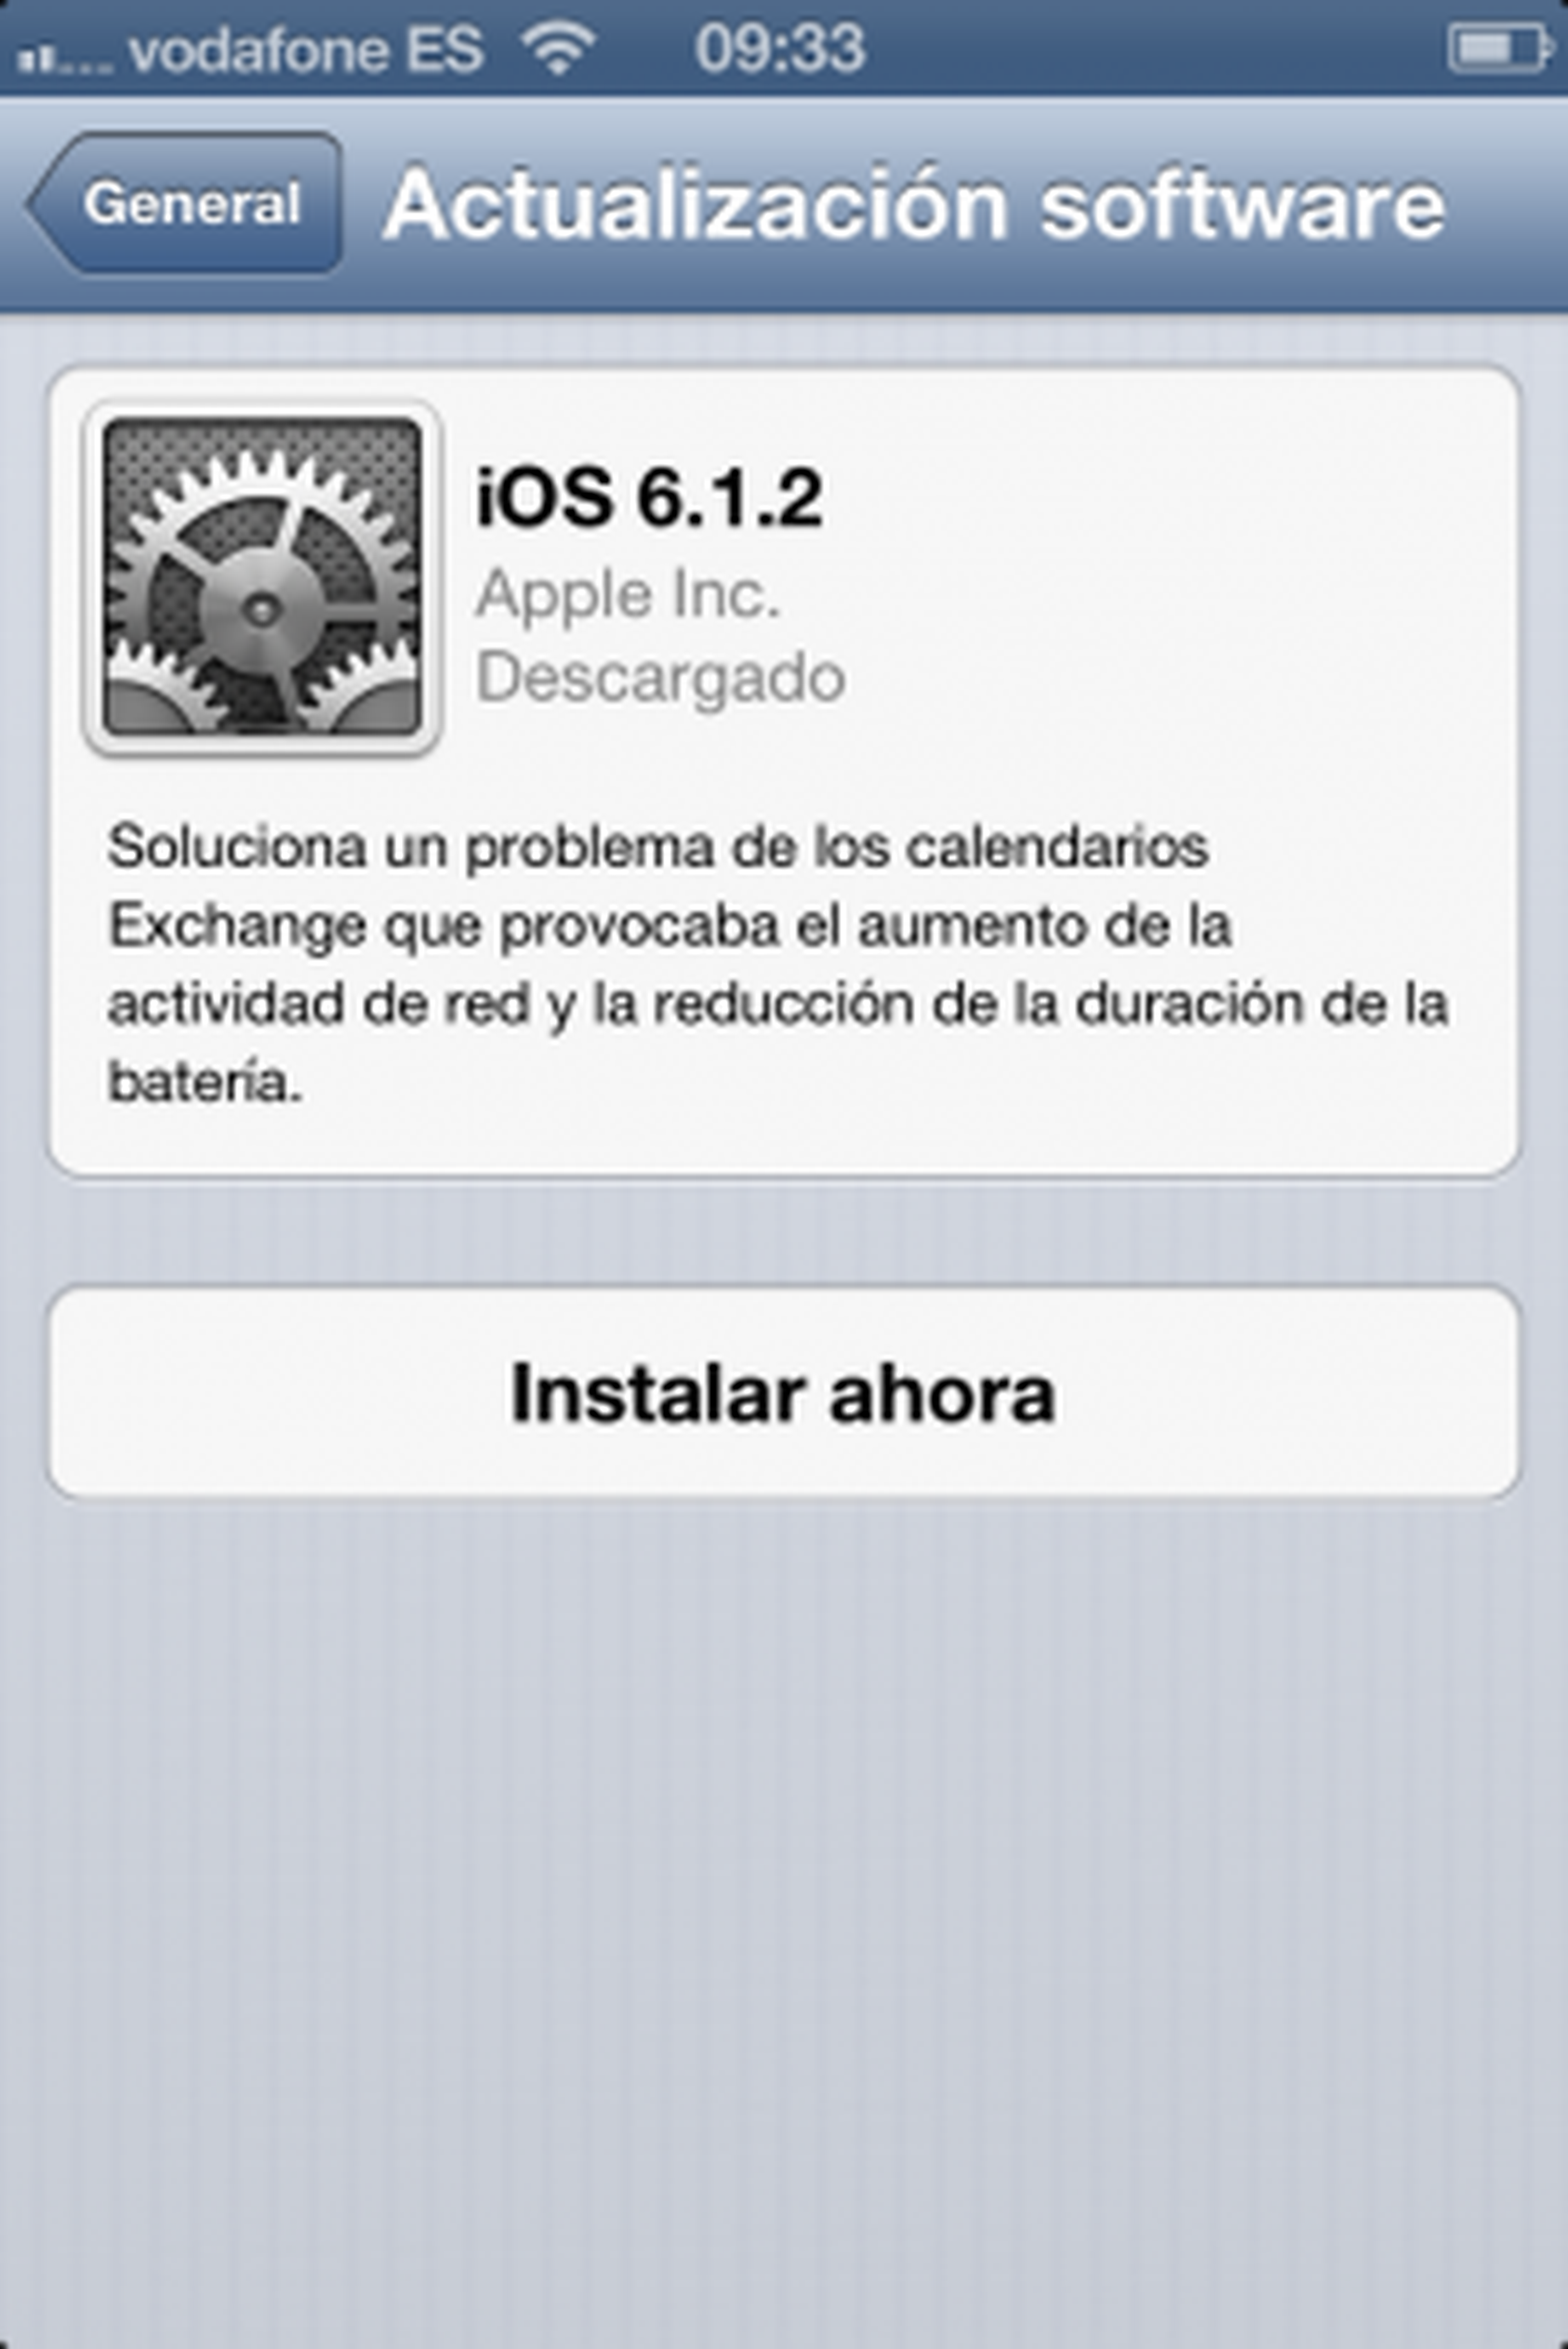 Actualiza el software a iOS 6.1.2 para hacer jailbreak a tu iPhone o iPad